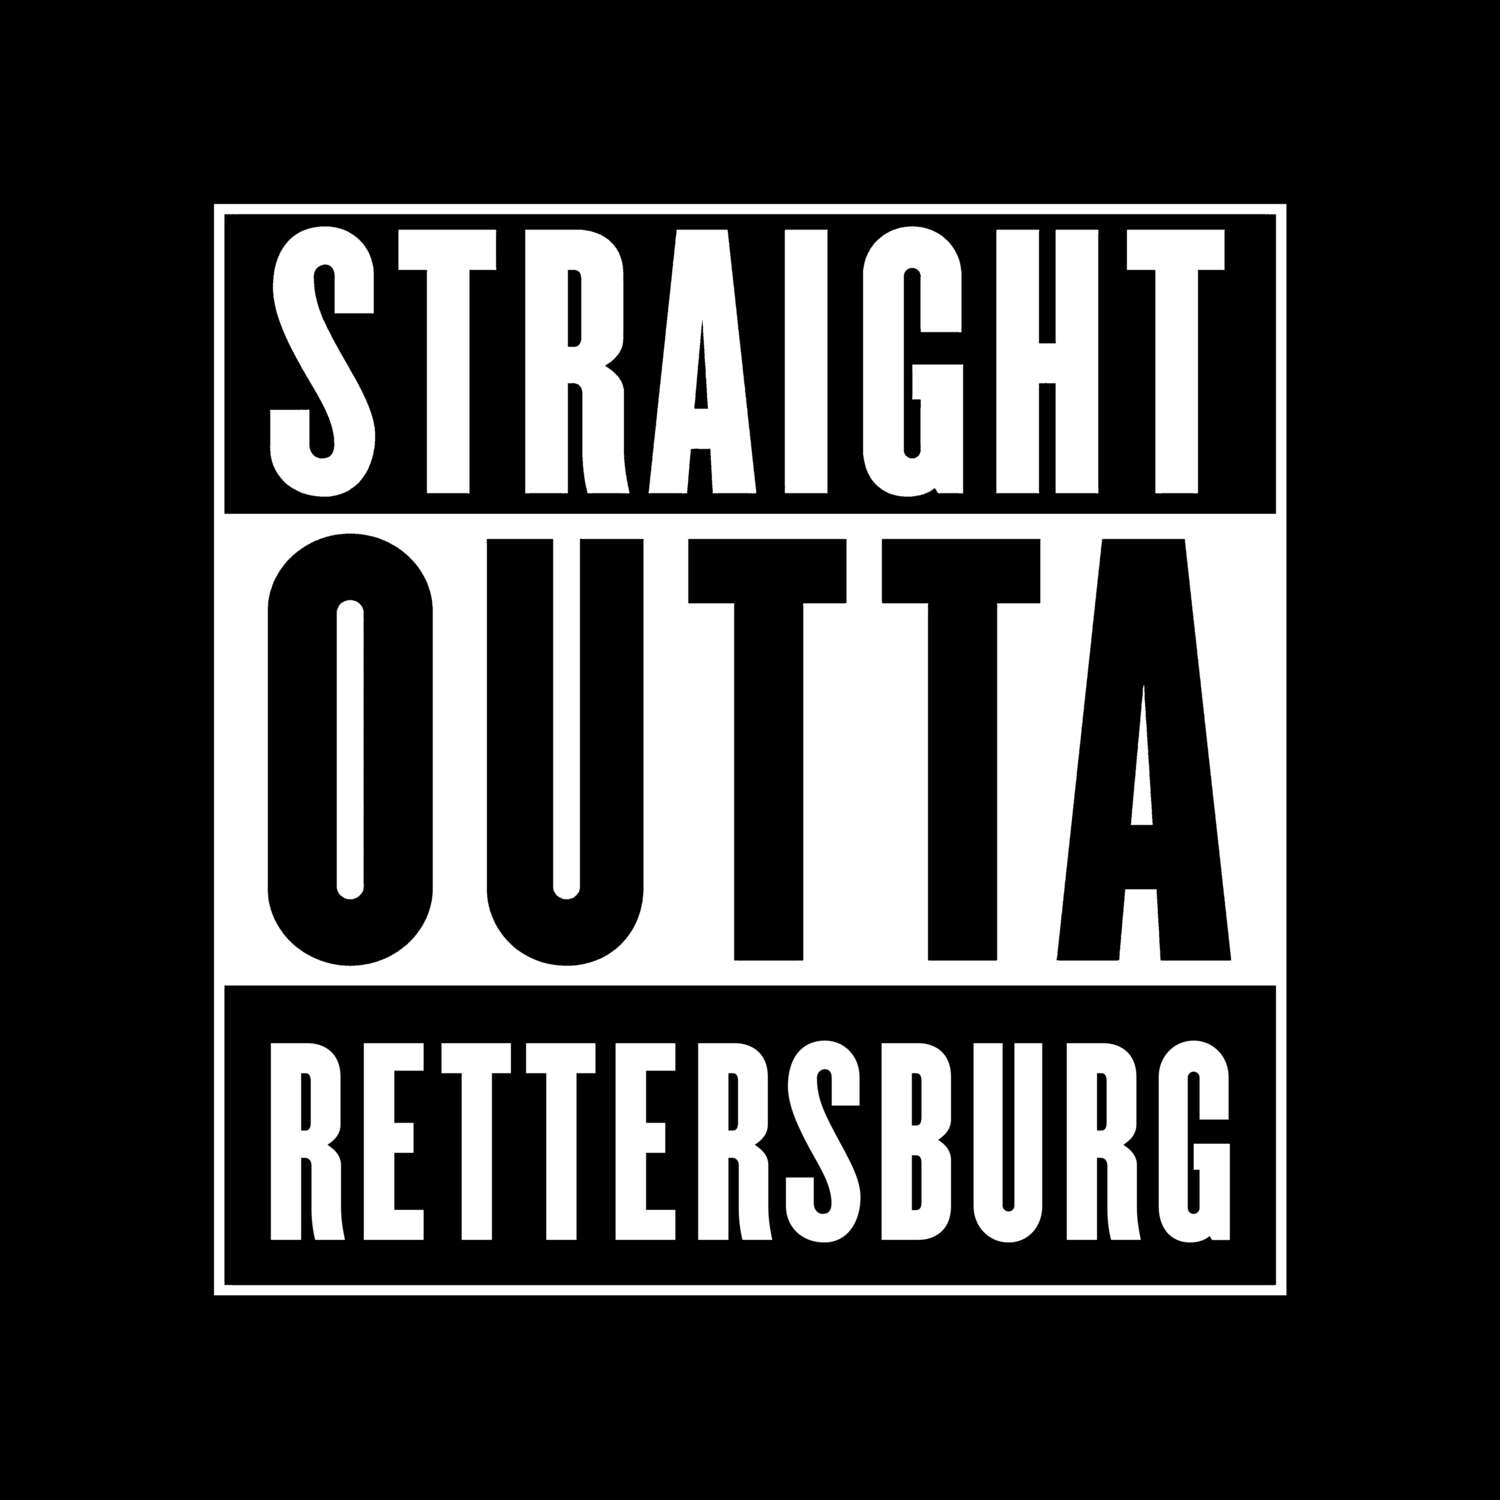 Rettersburg T-Shirt »Straight Outta«